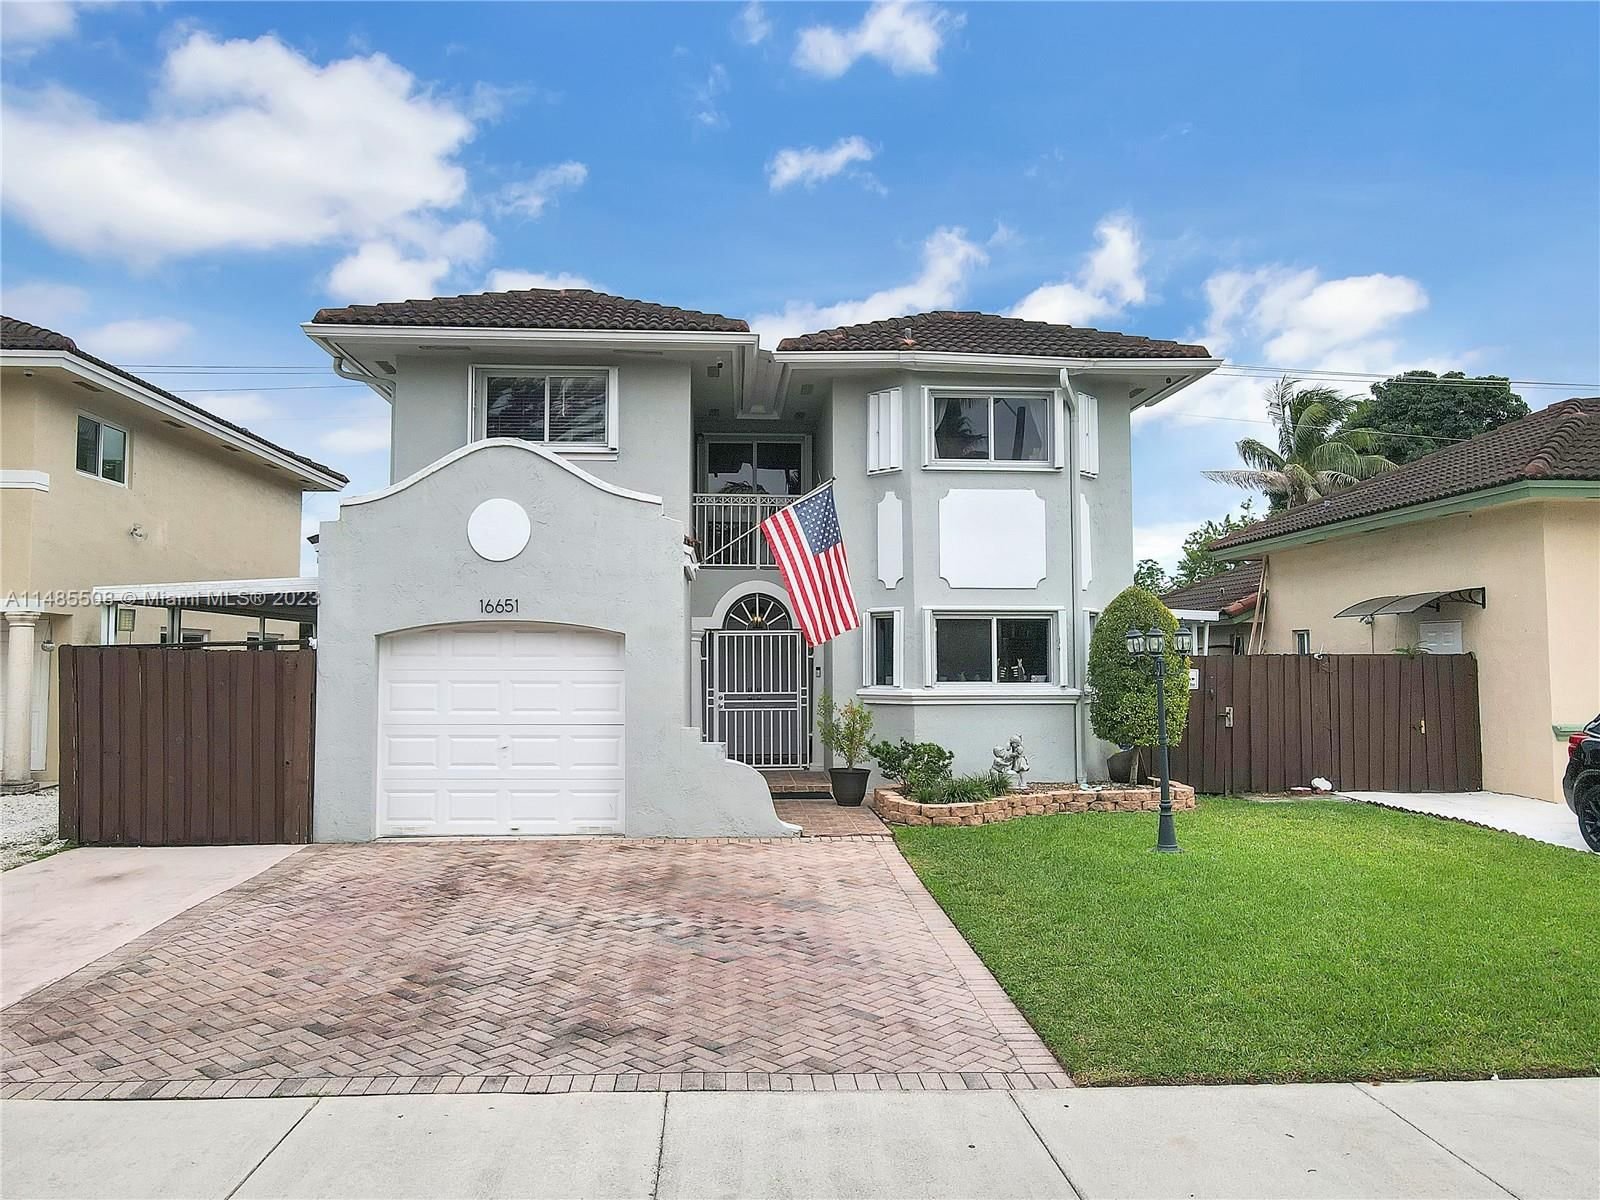 Real estate property located at 16651 140th Ave, Miami-Dade County, Miami, FL